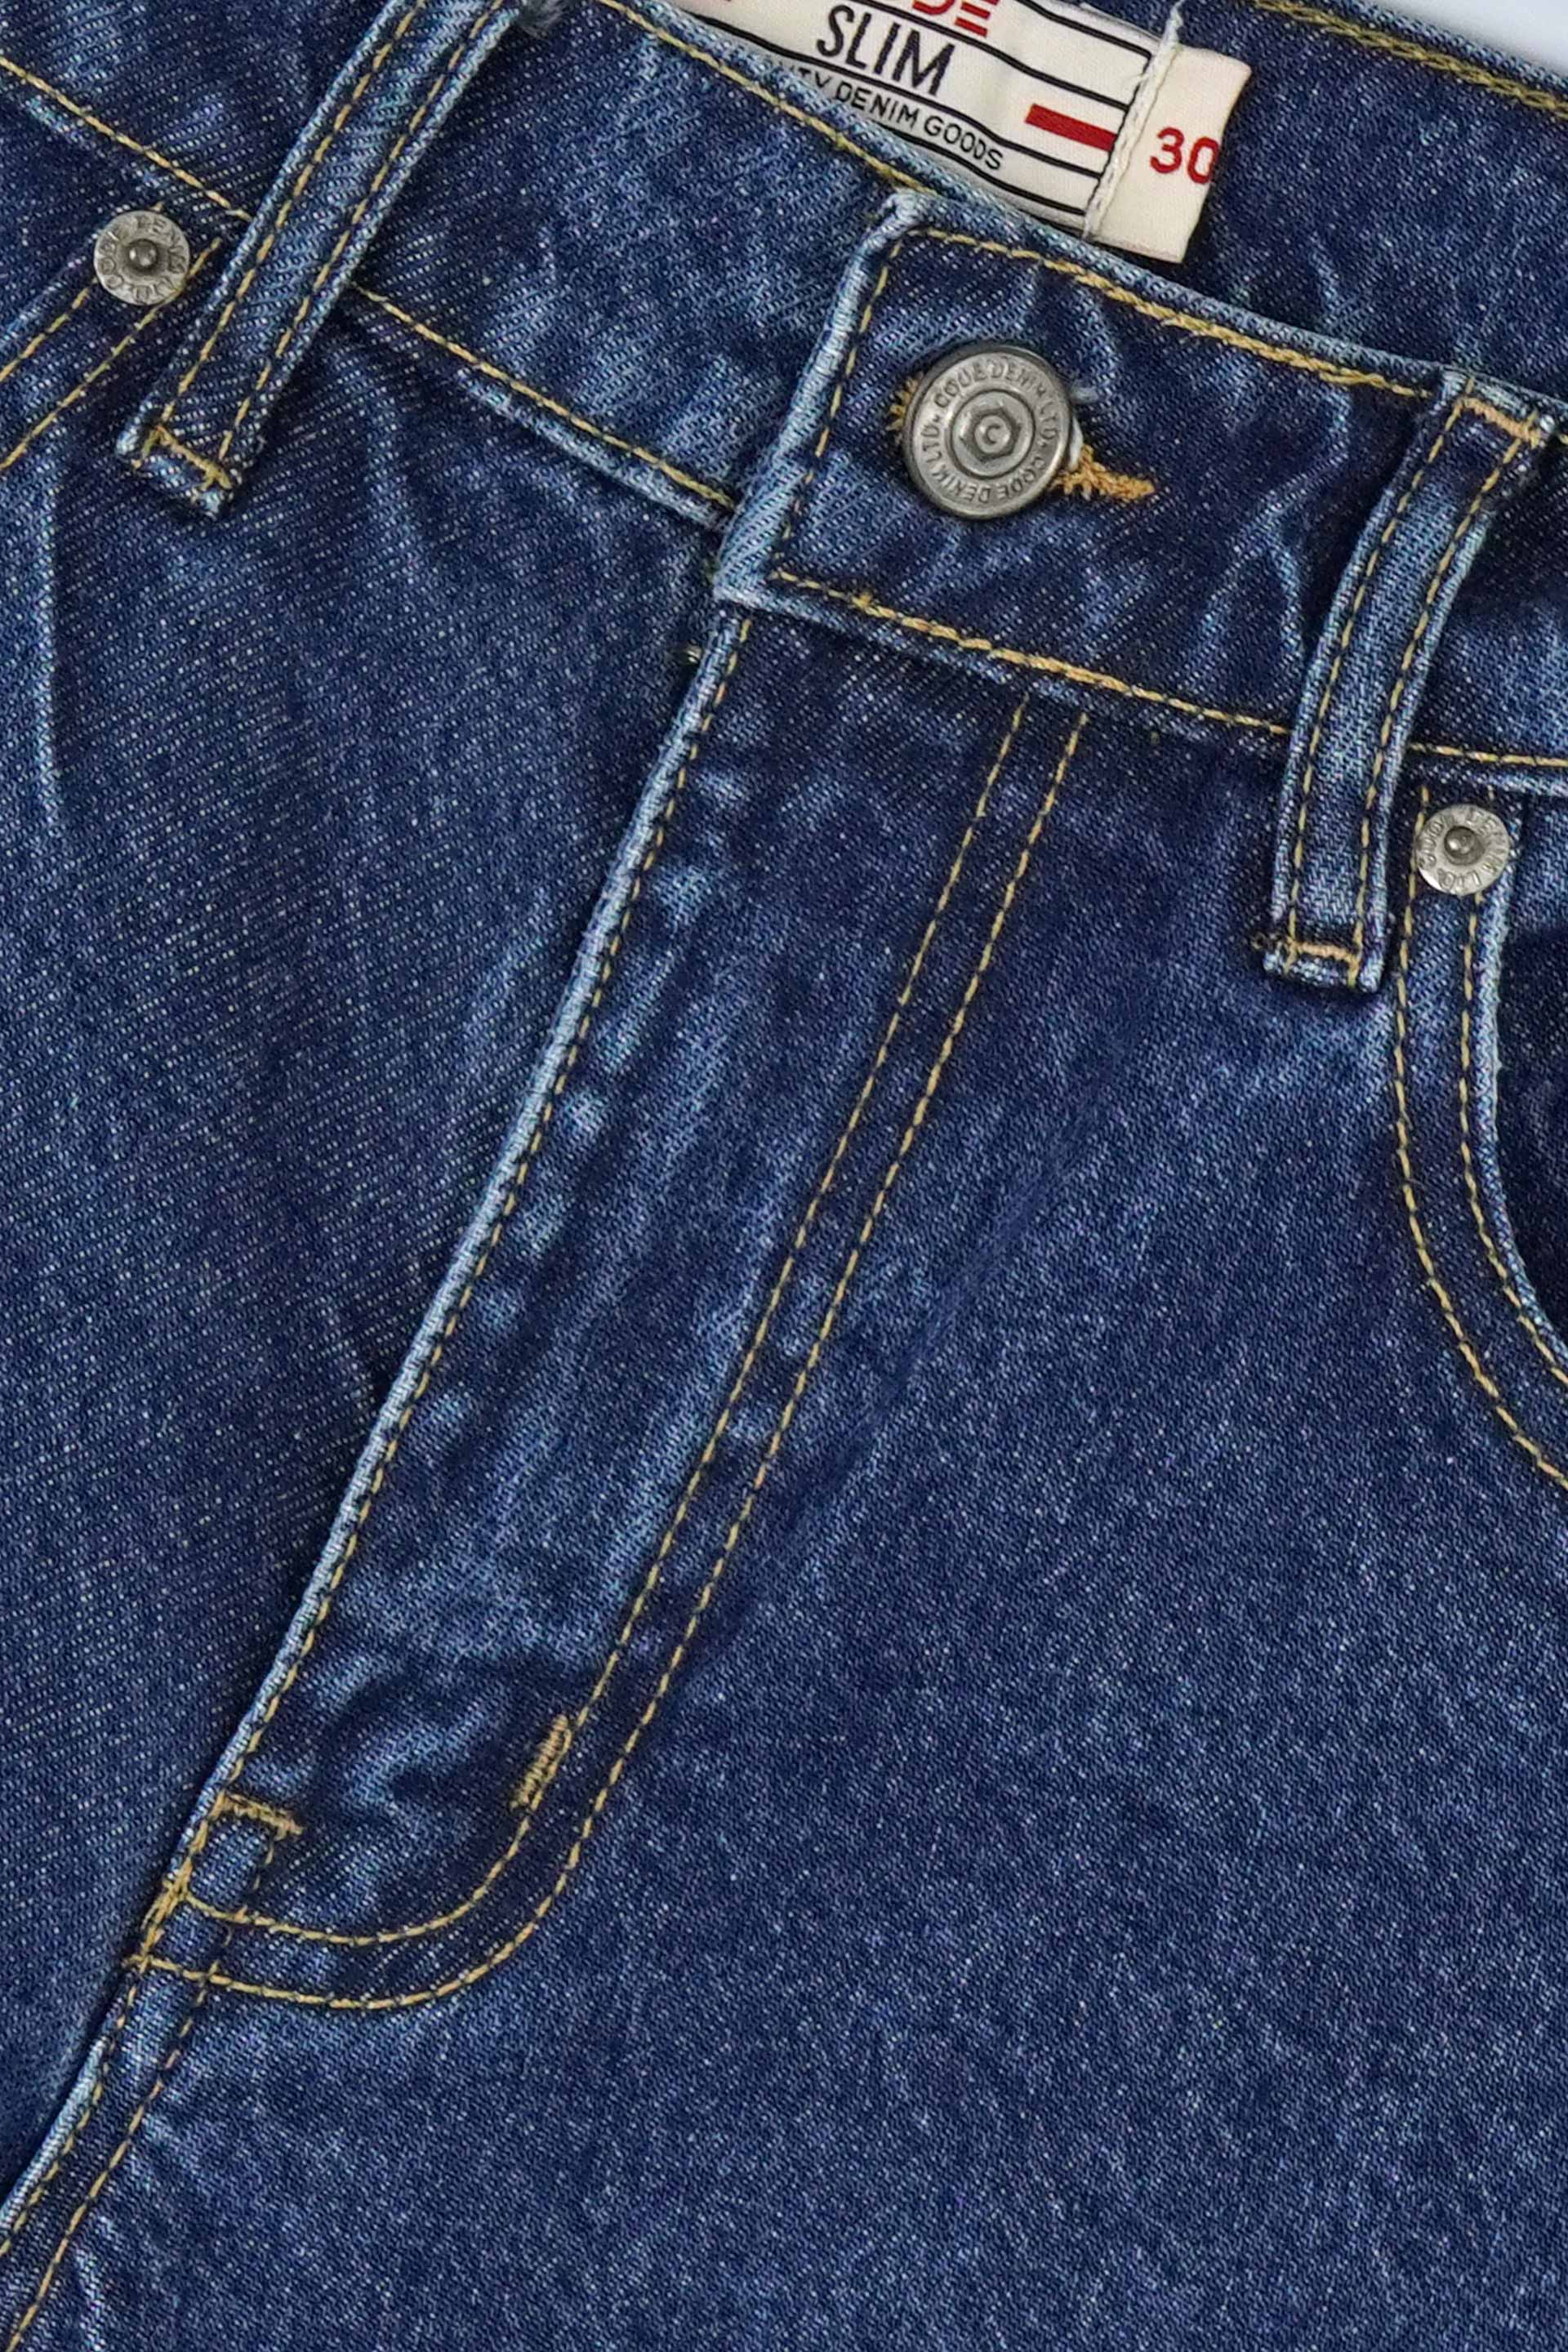 Dark Blue Denim Jeans Tailor Fit